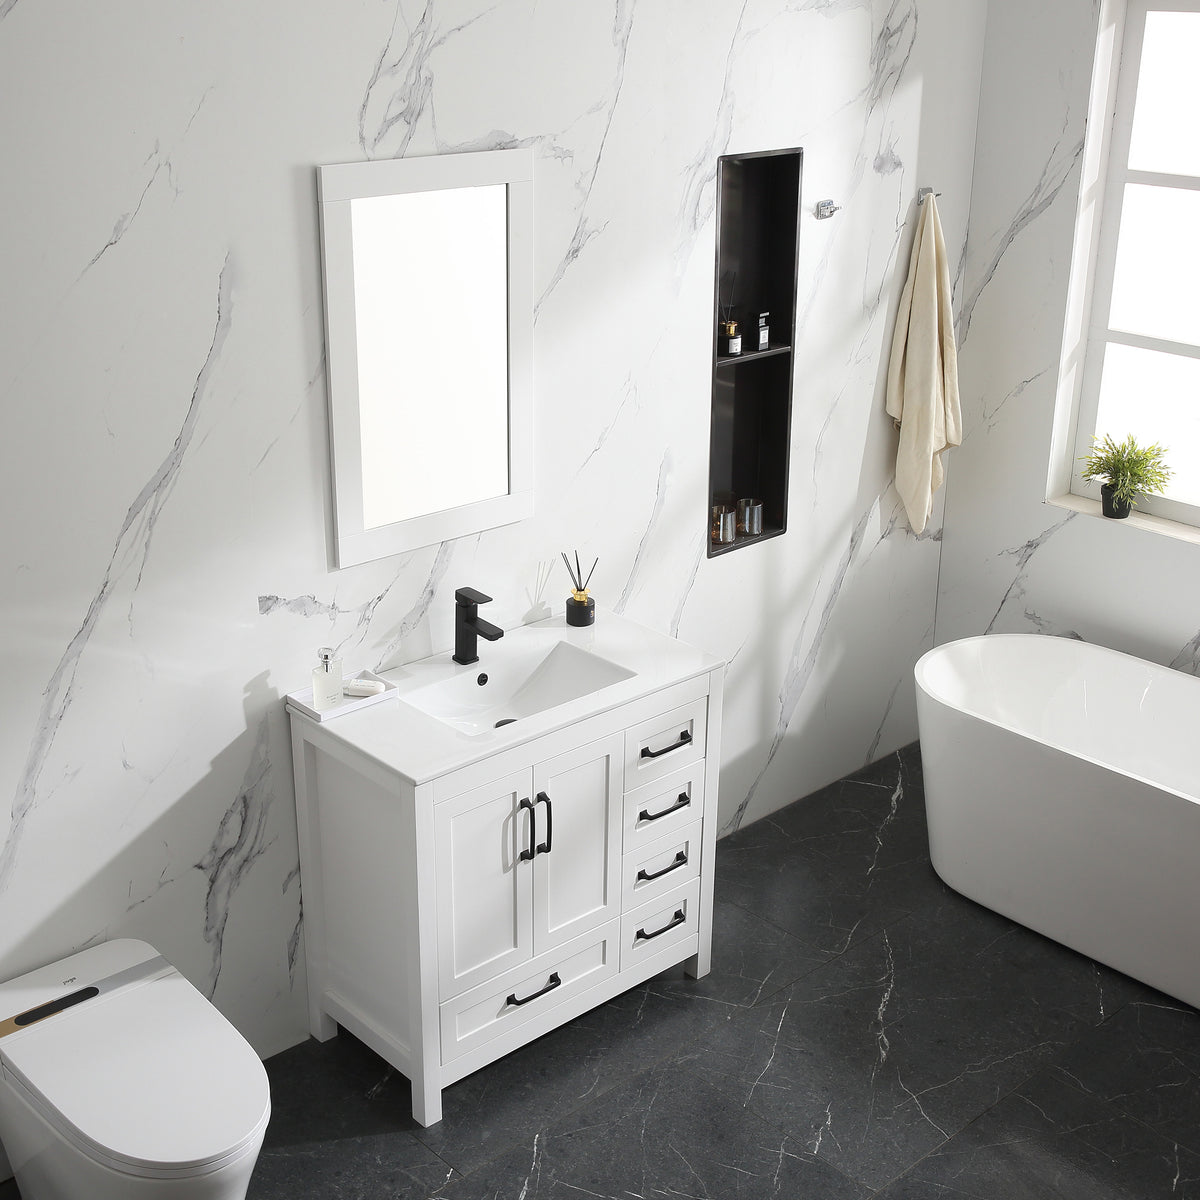 Bathroom Vessel Sink Undermount Combo Ceramic Bowl & Faucet & Pop Up Drain - White